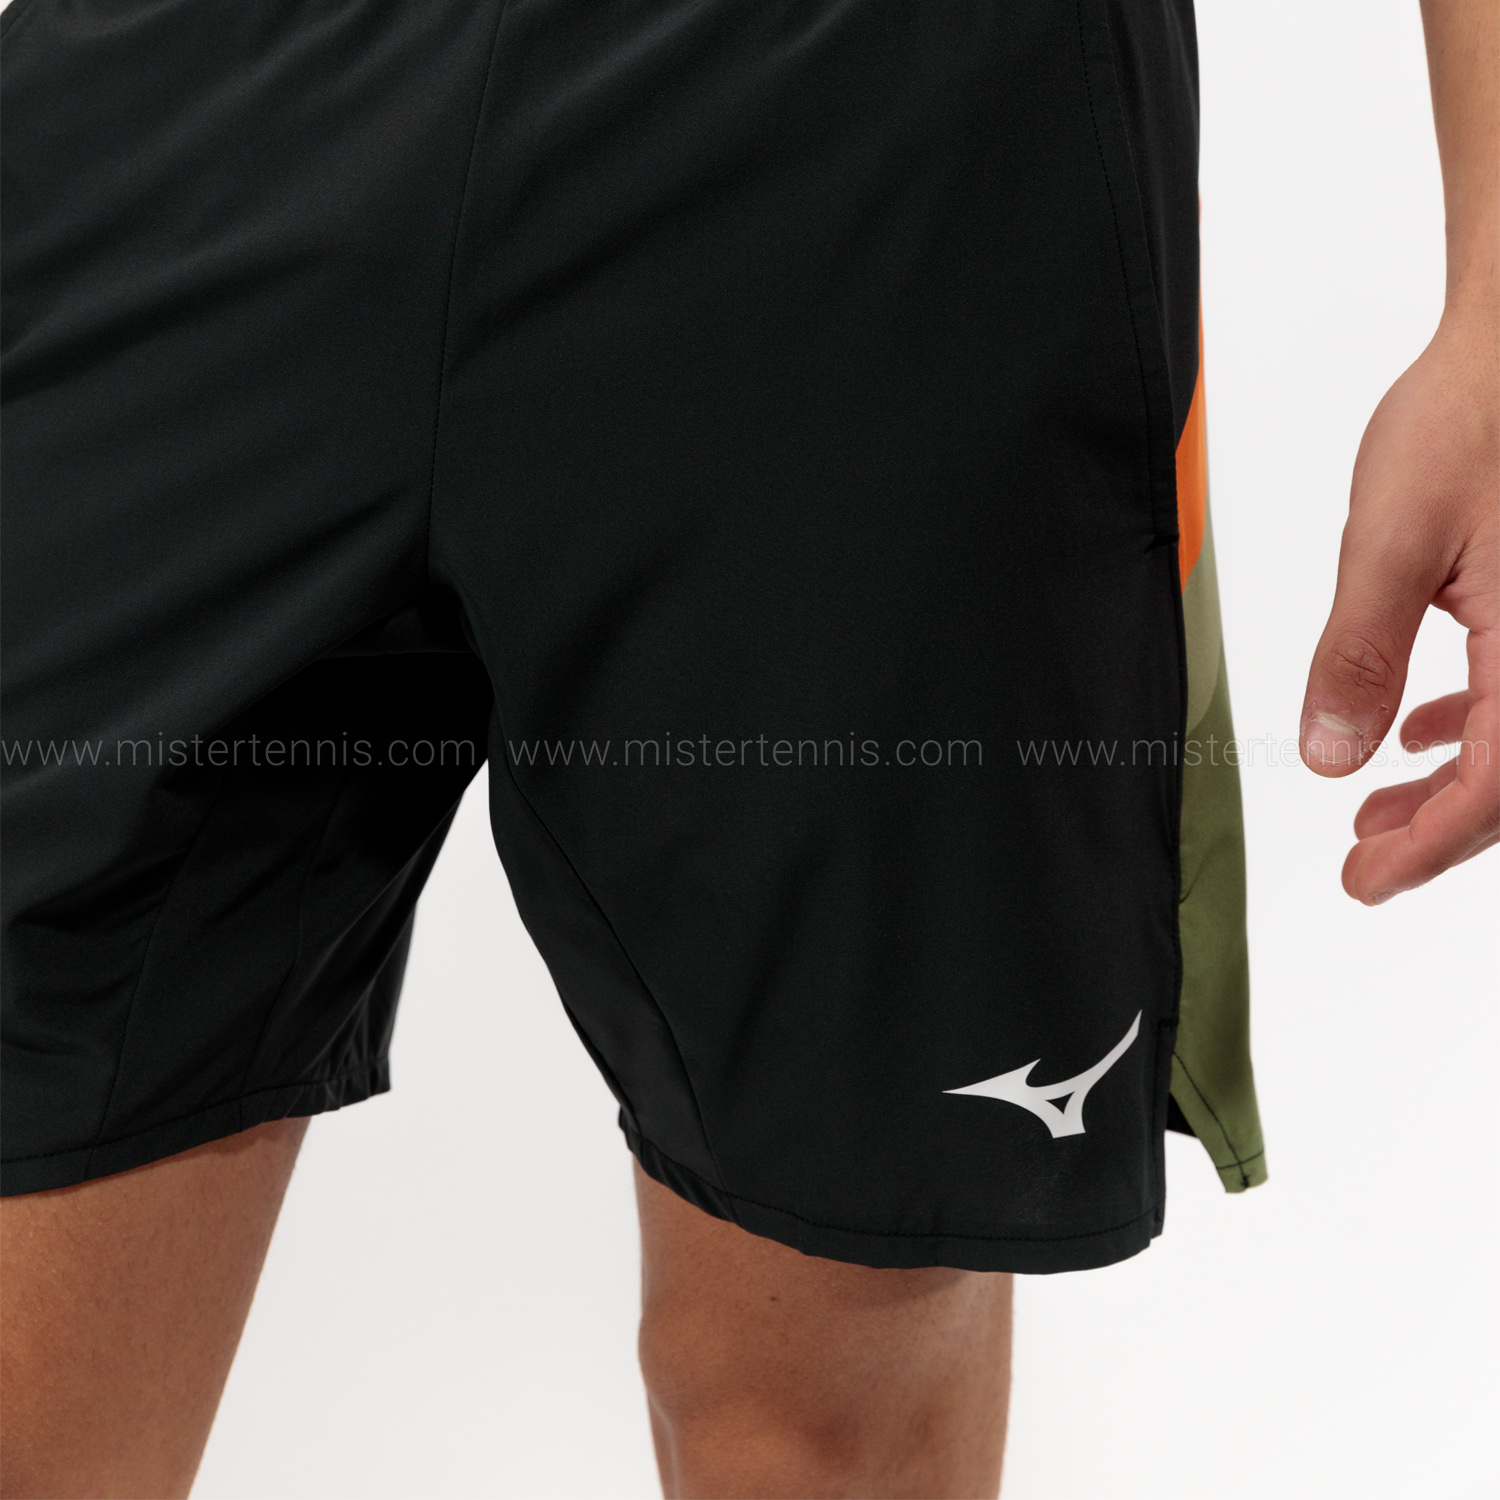 Mizuno Release Amplify 8in Shorts - Black/Vibrant Orange